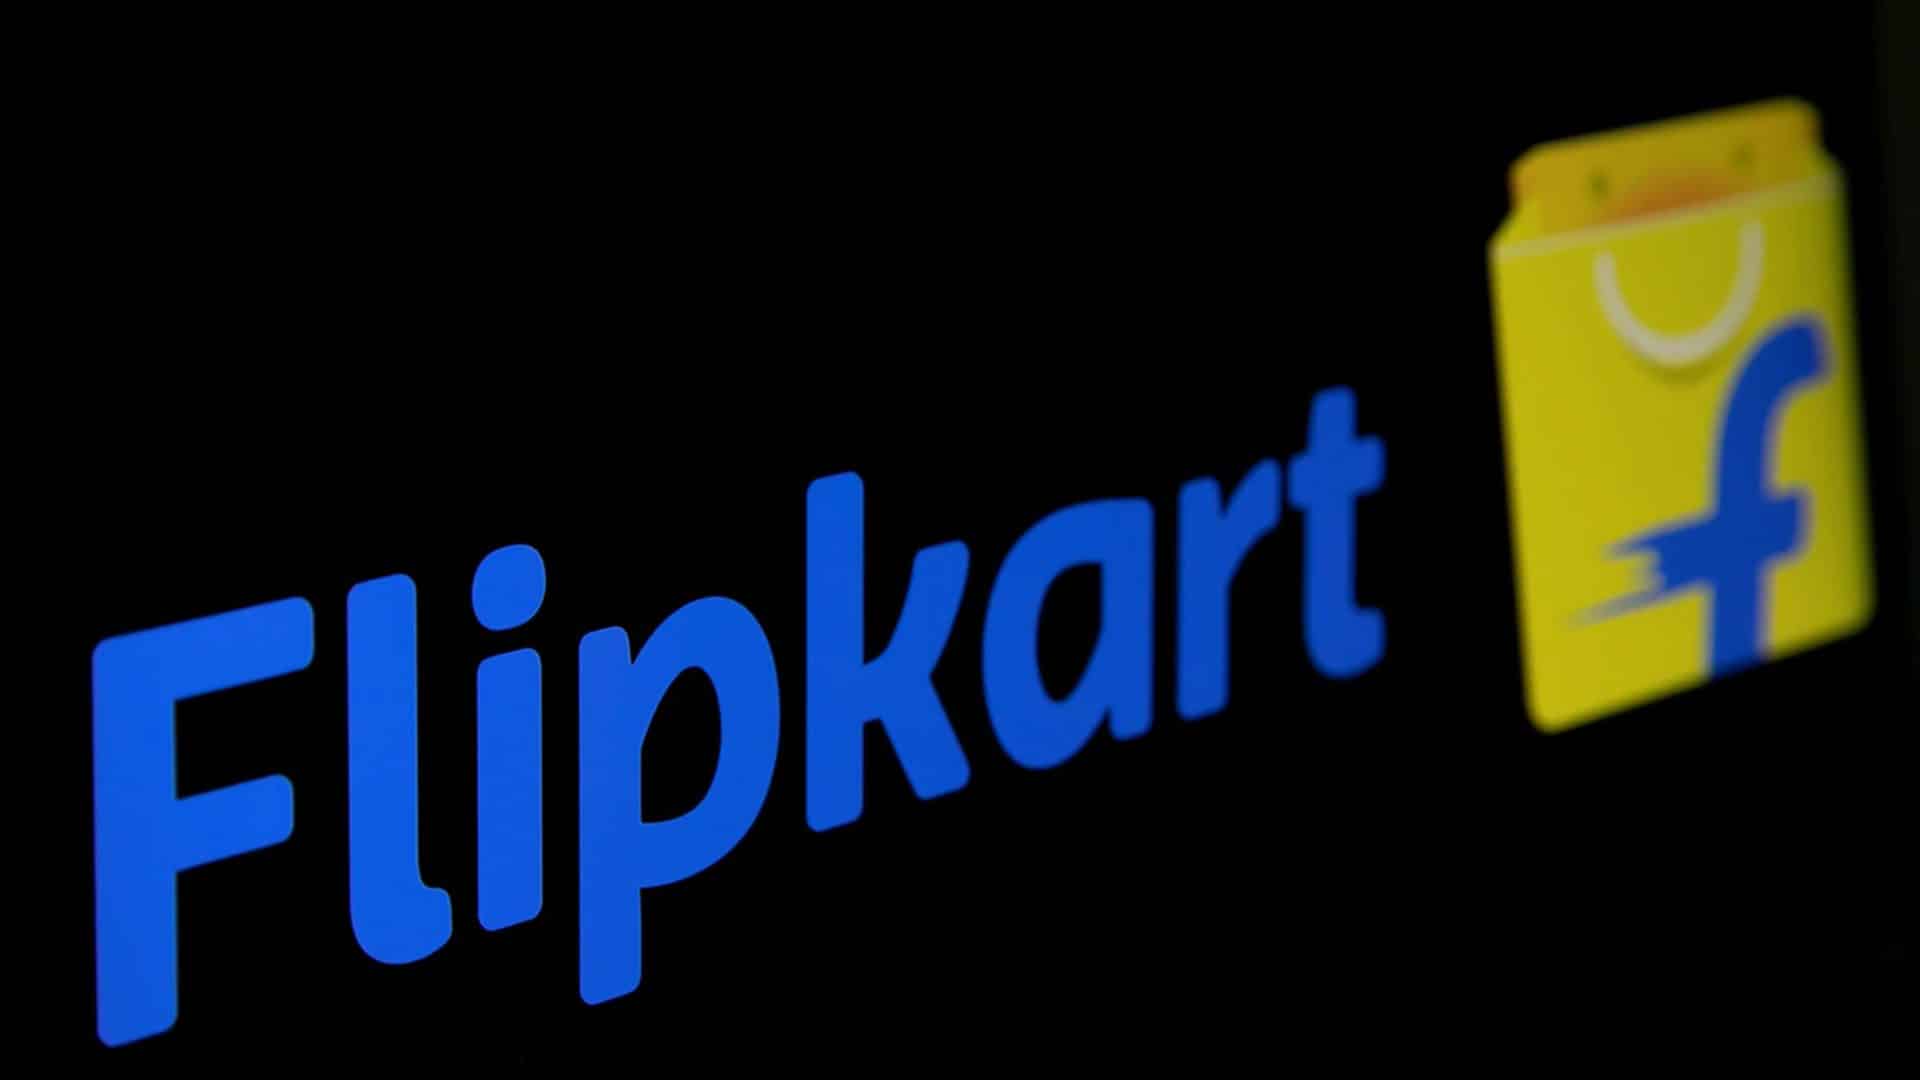 Flipkart is changing 'The Big Billion Days' dates to Oct 3-10